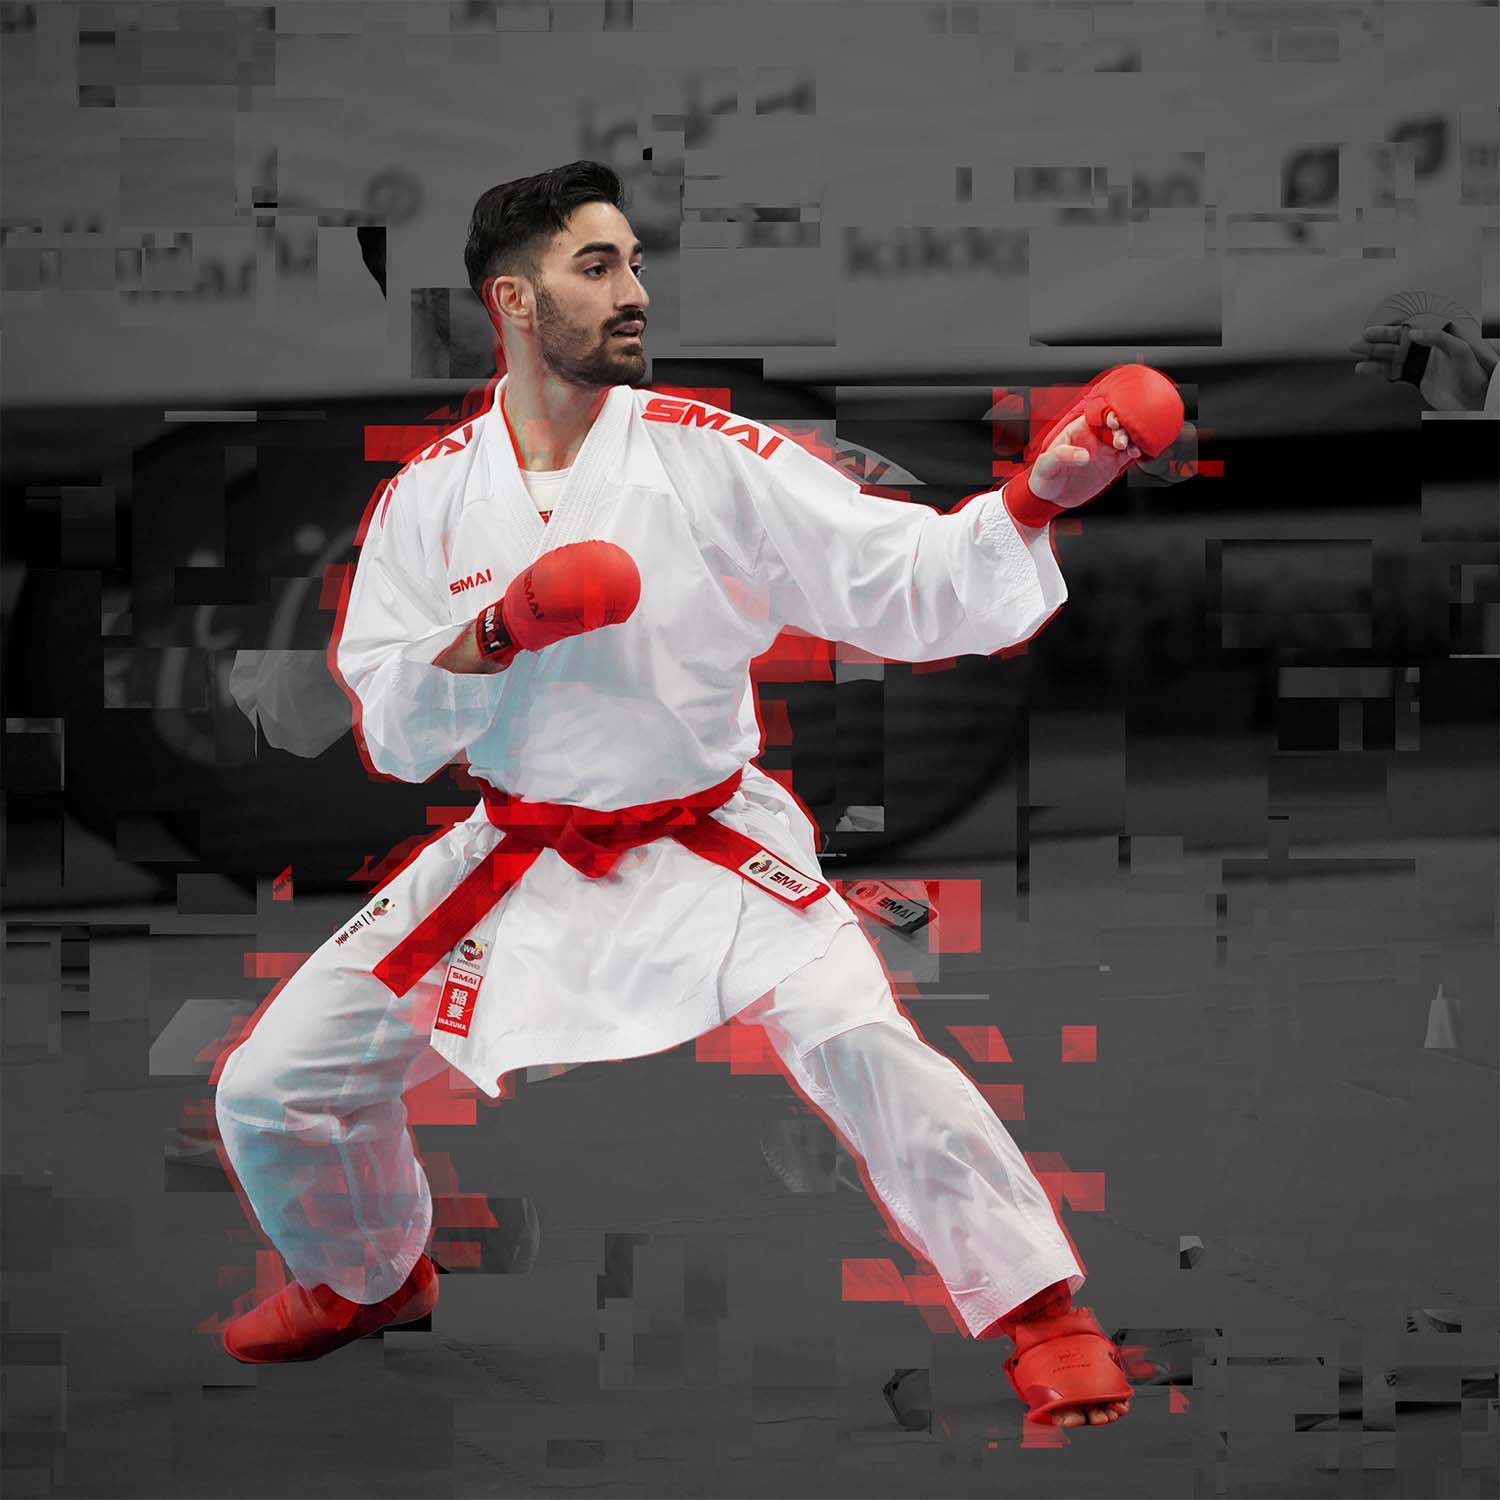 karate athlete sparring 